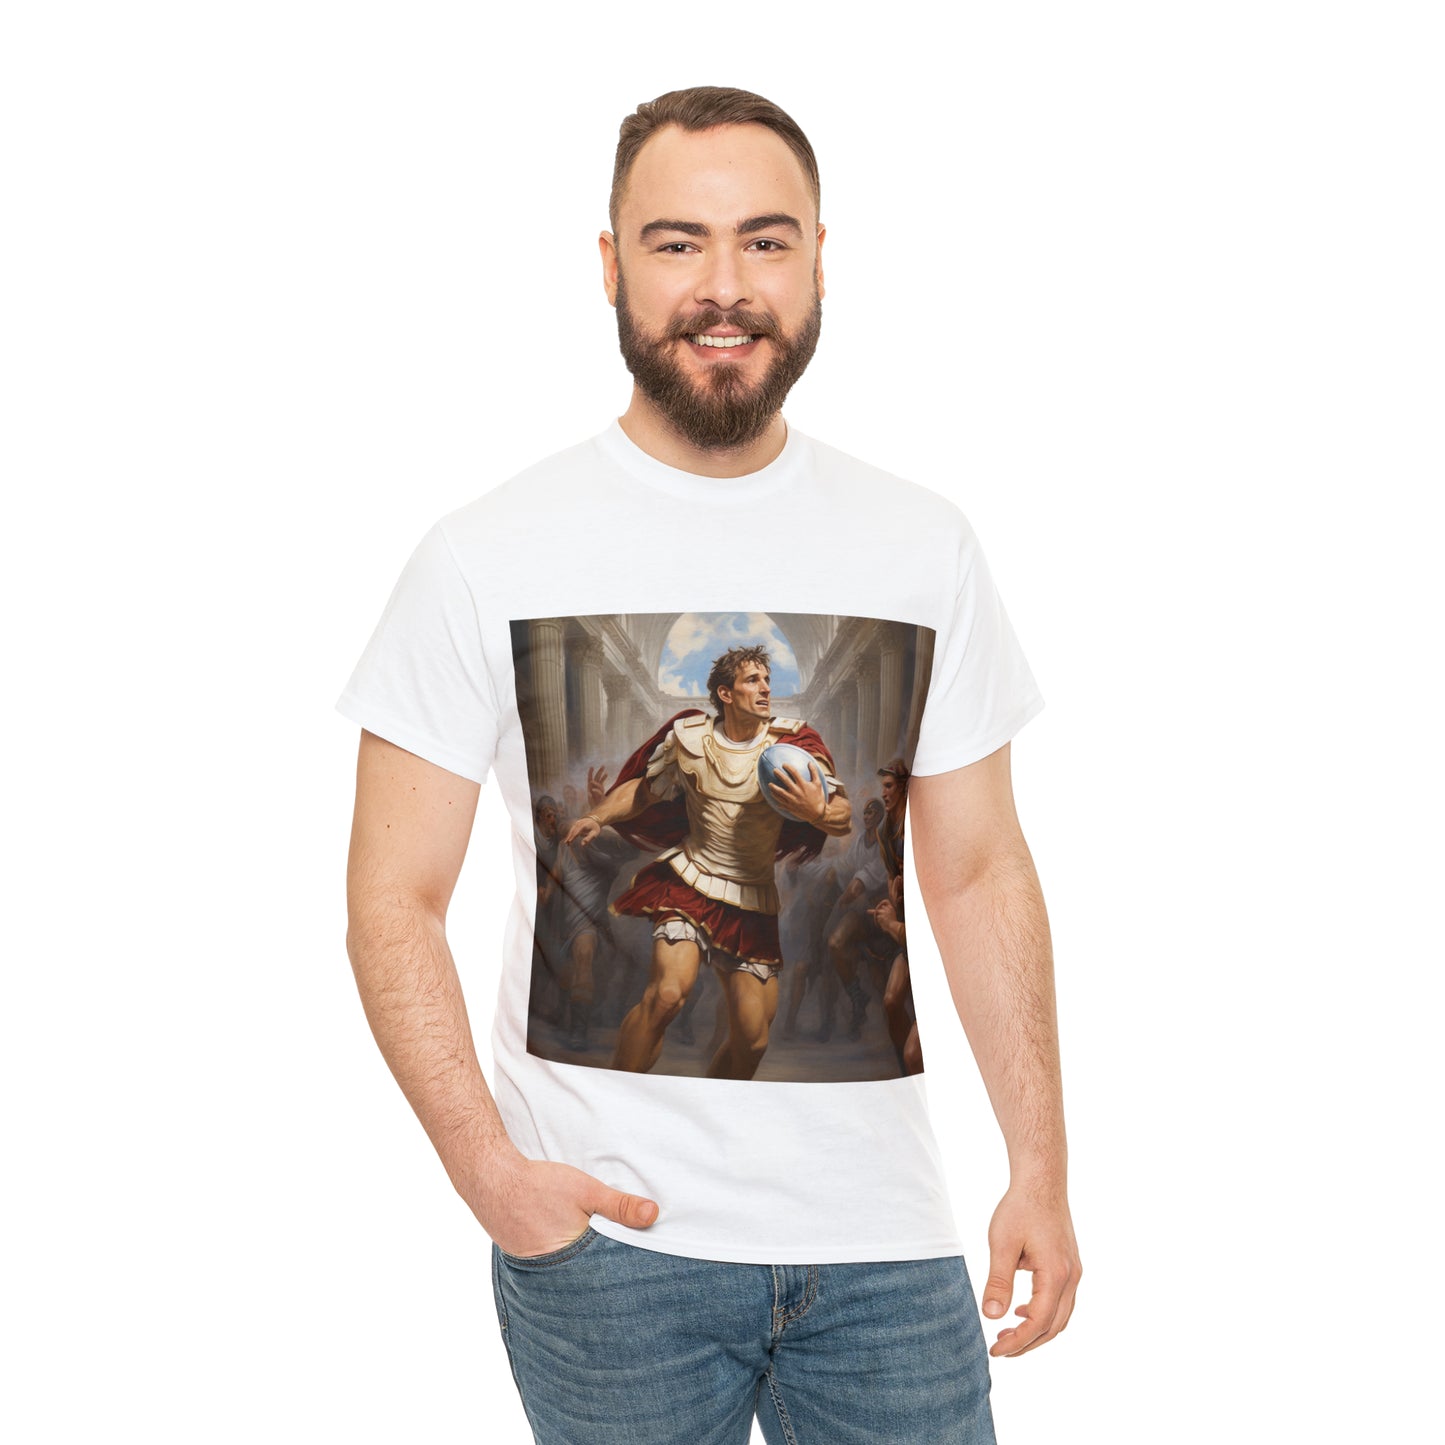 Caesar Rugby - light shirts